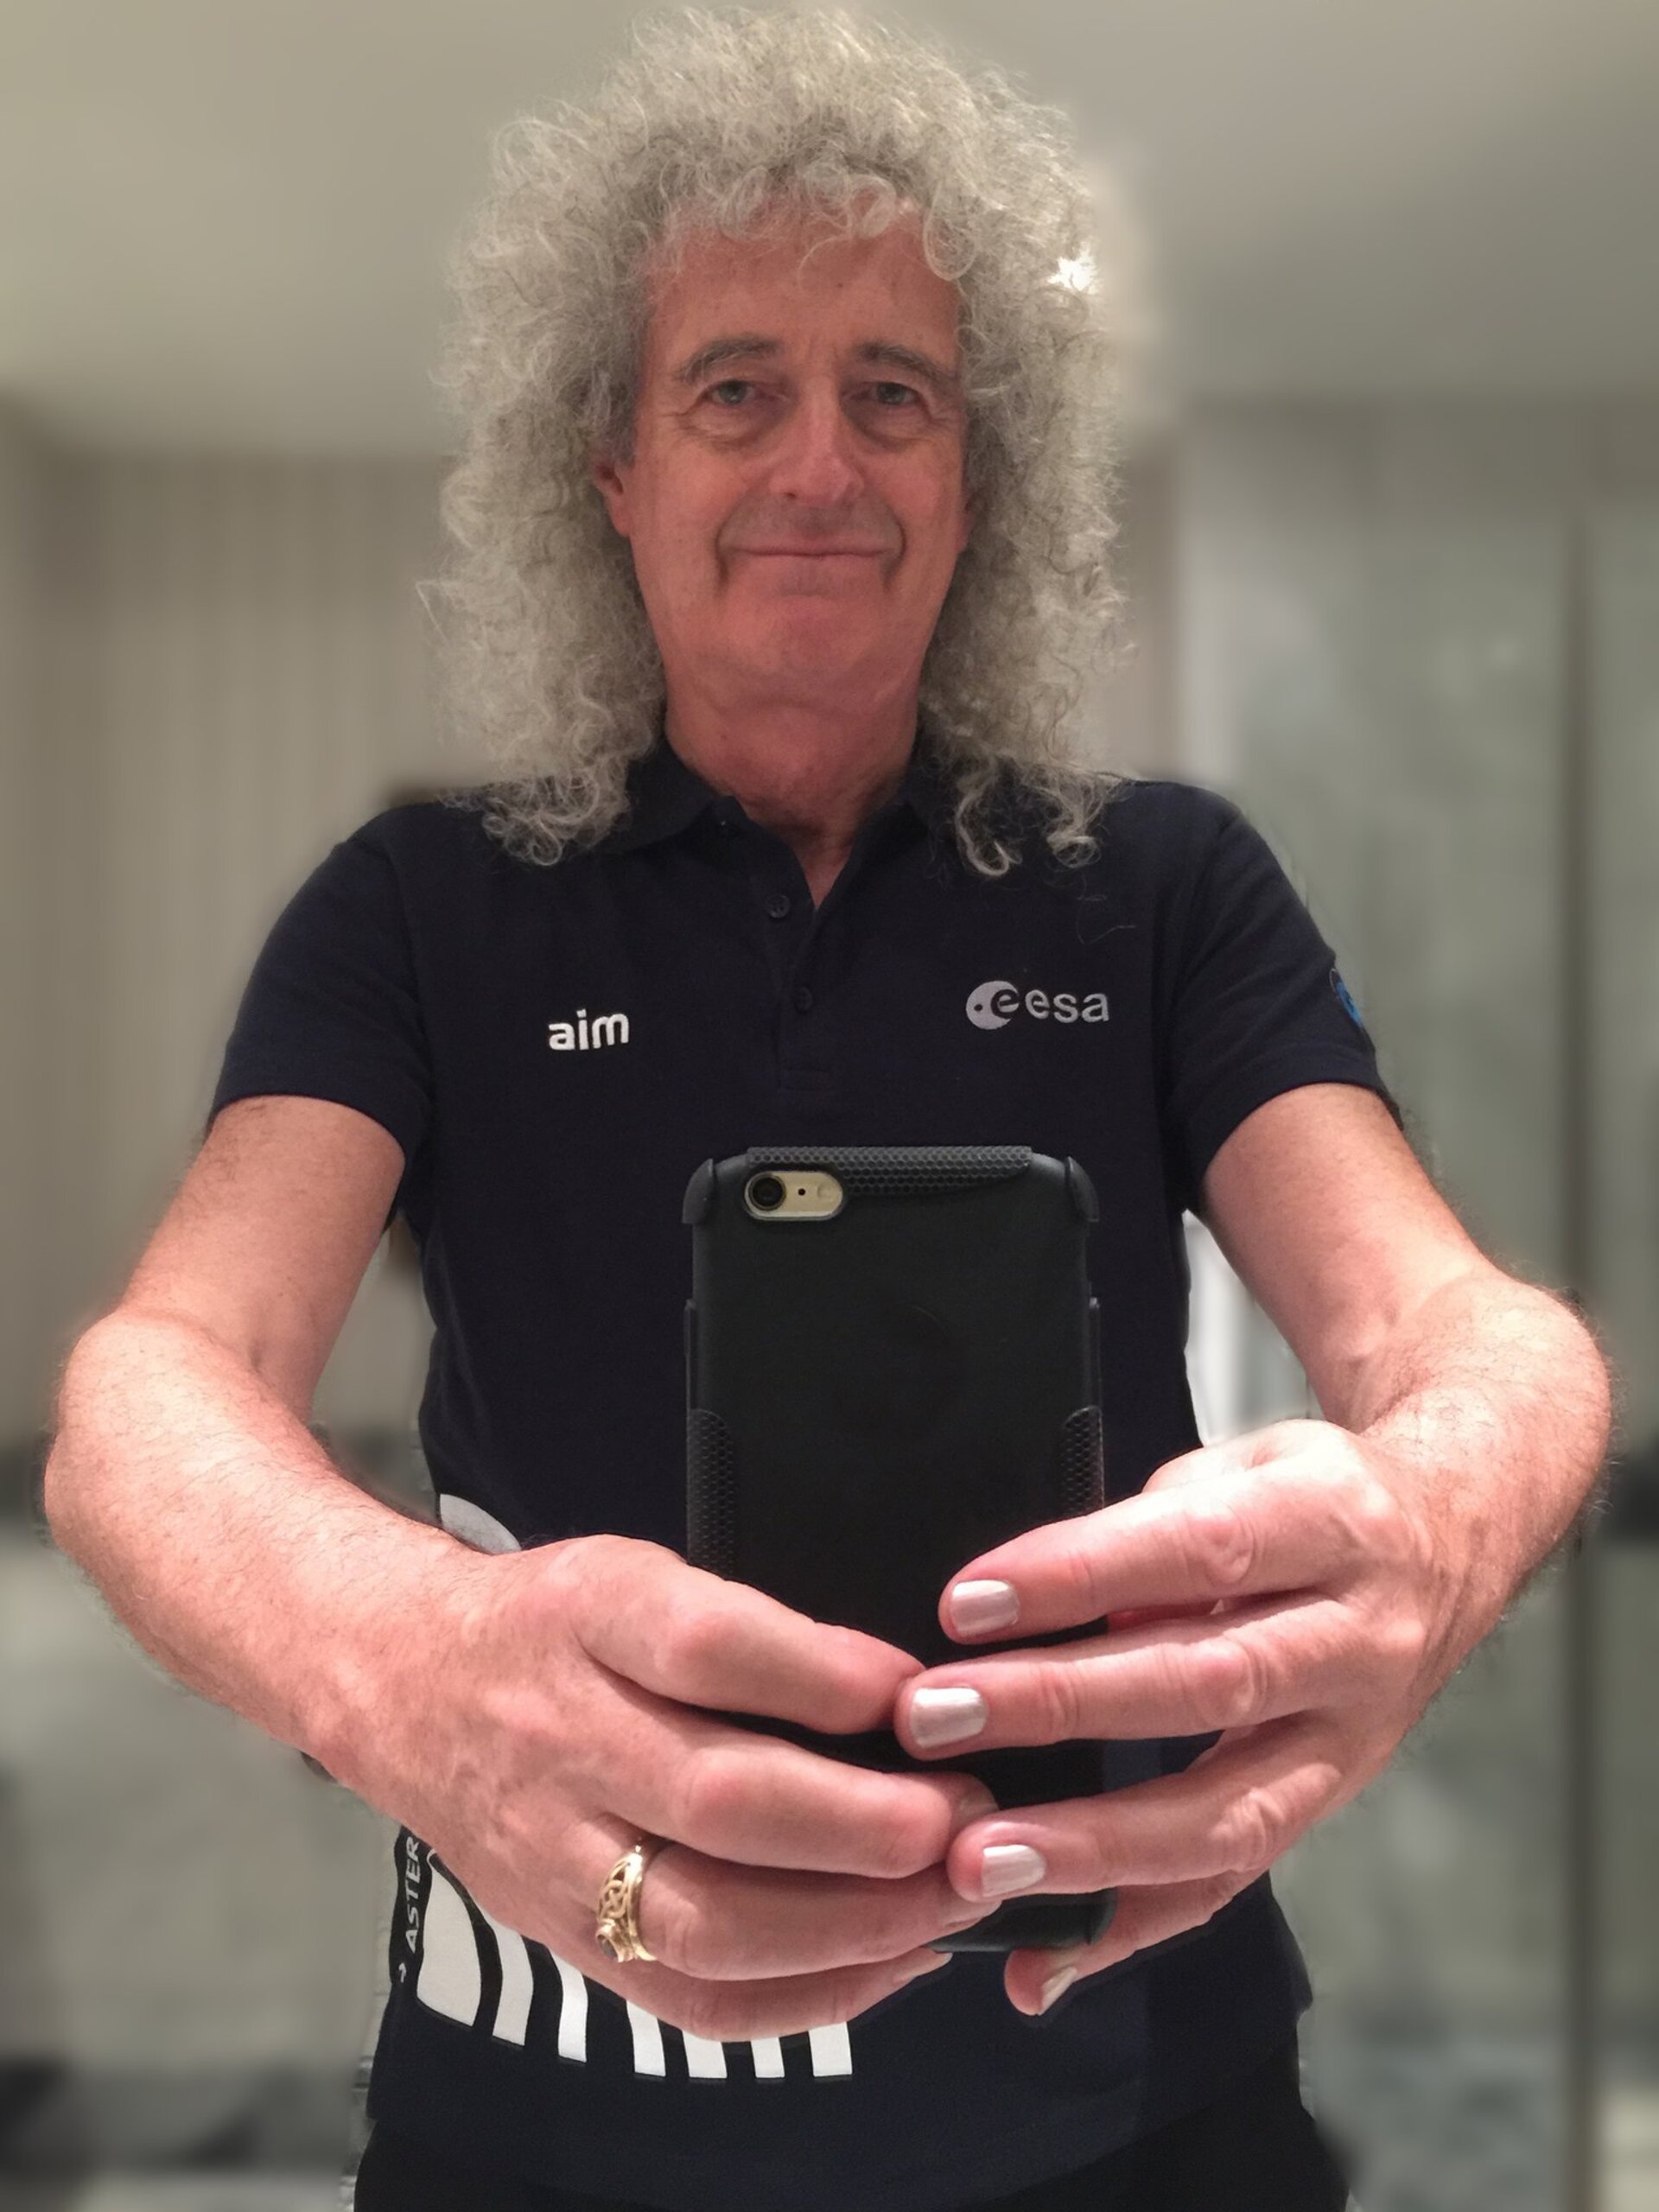 Brian May in ESA AIM shirt